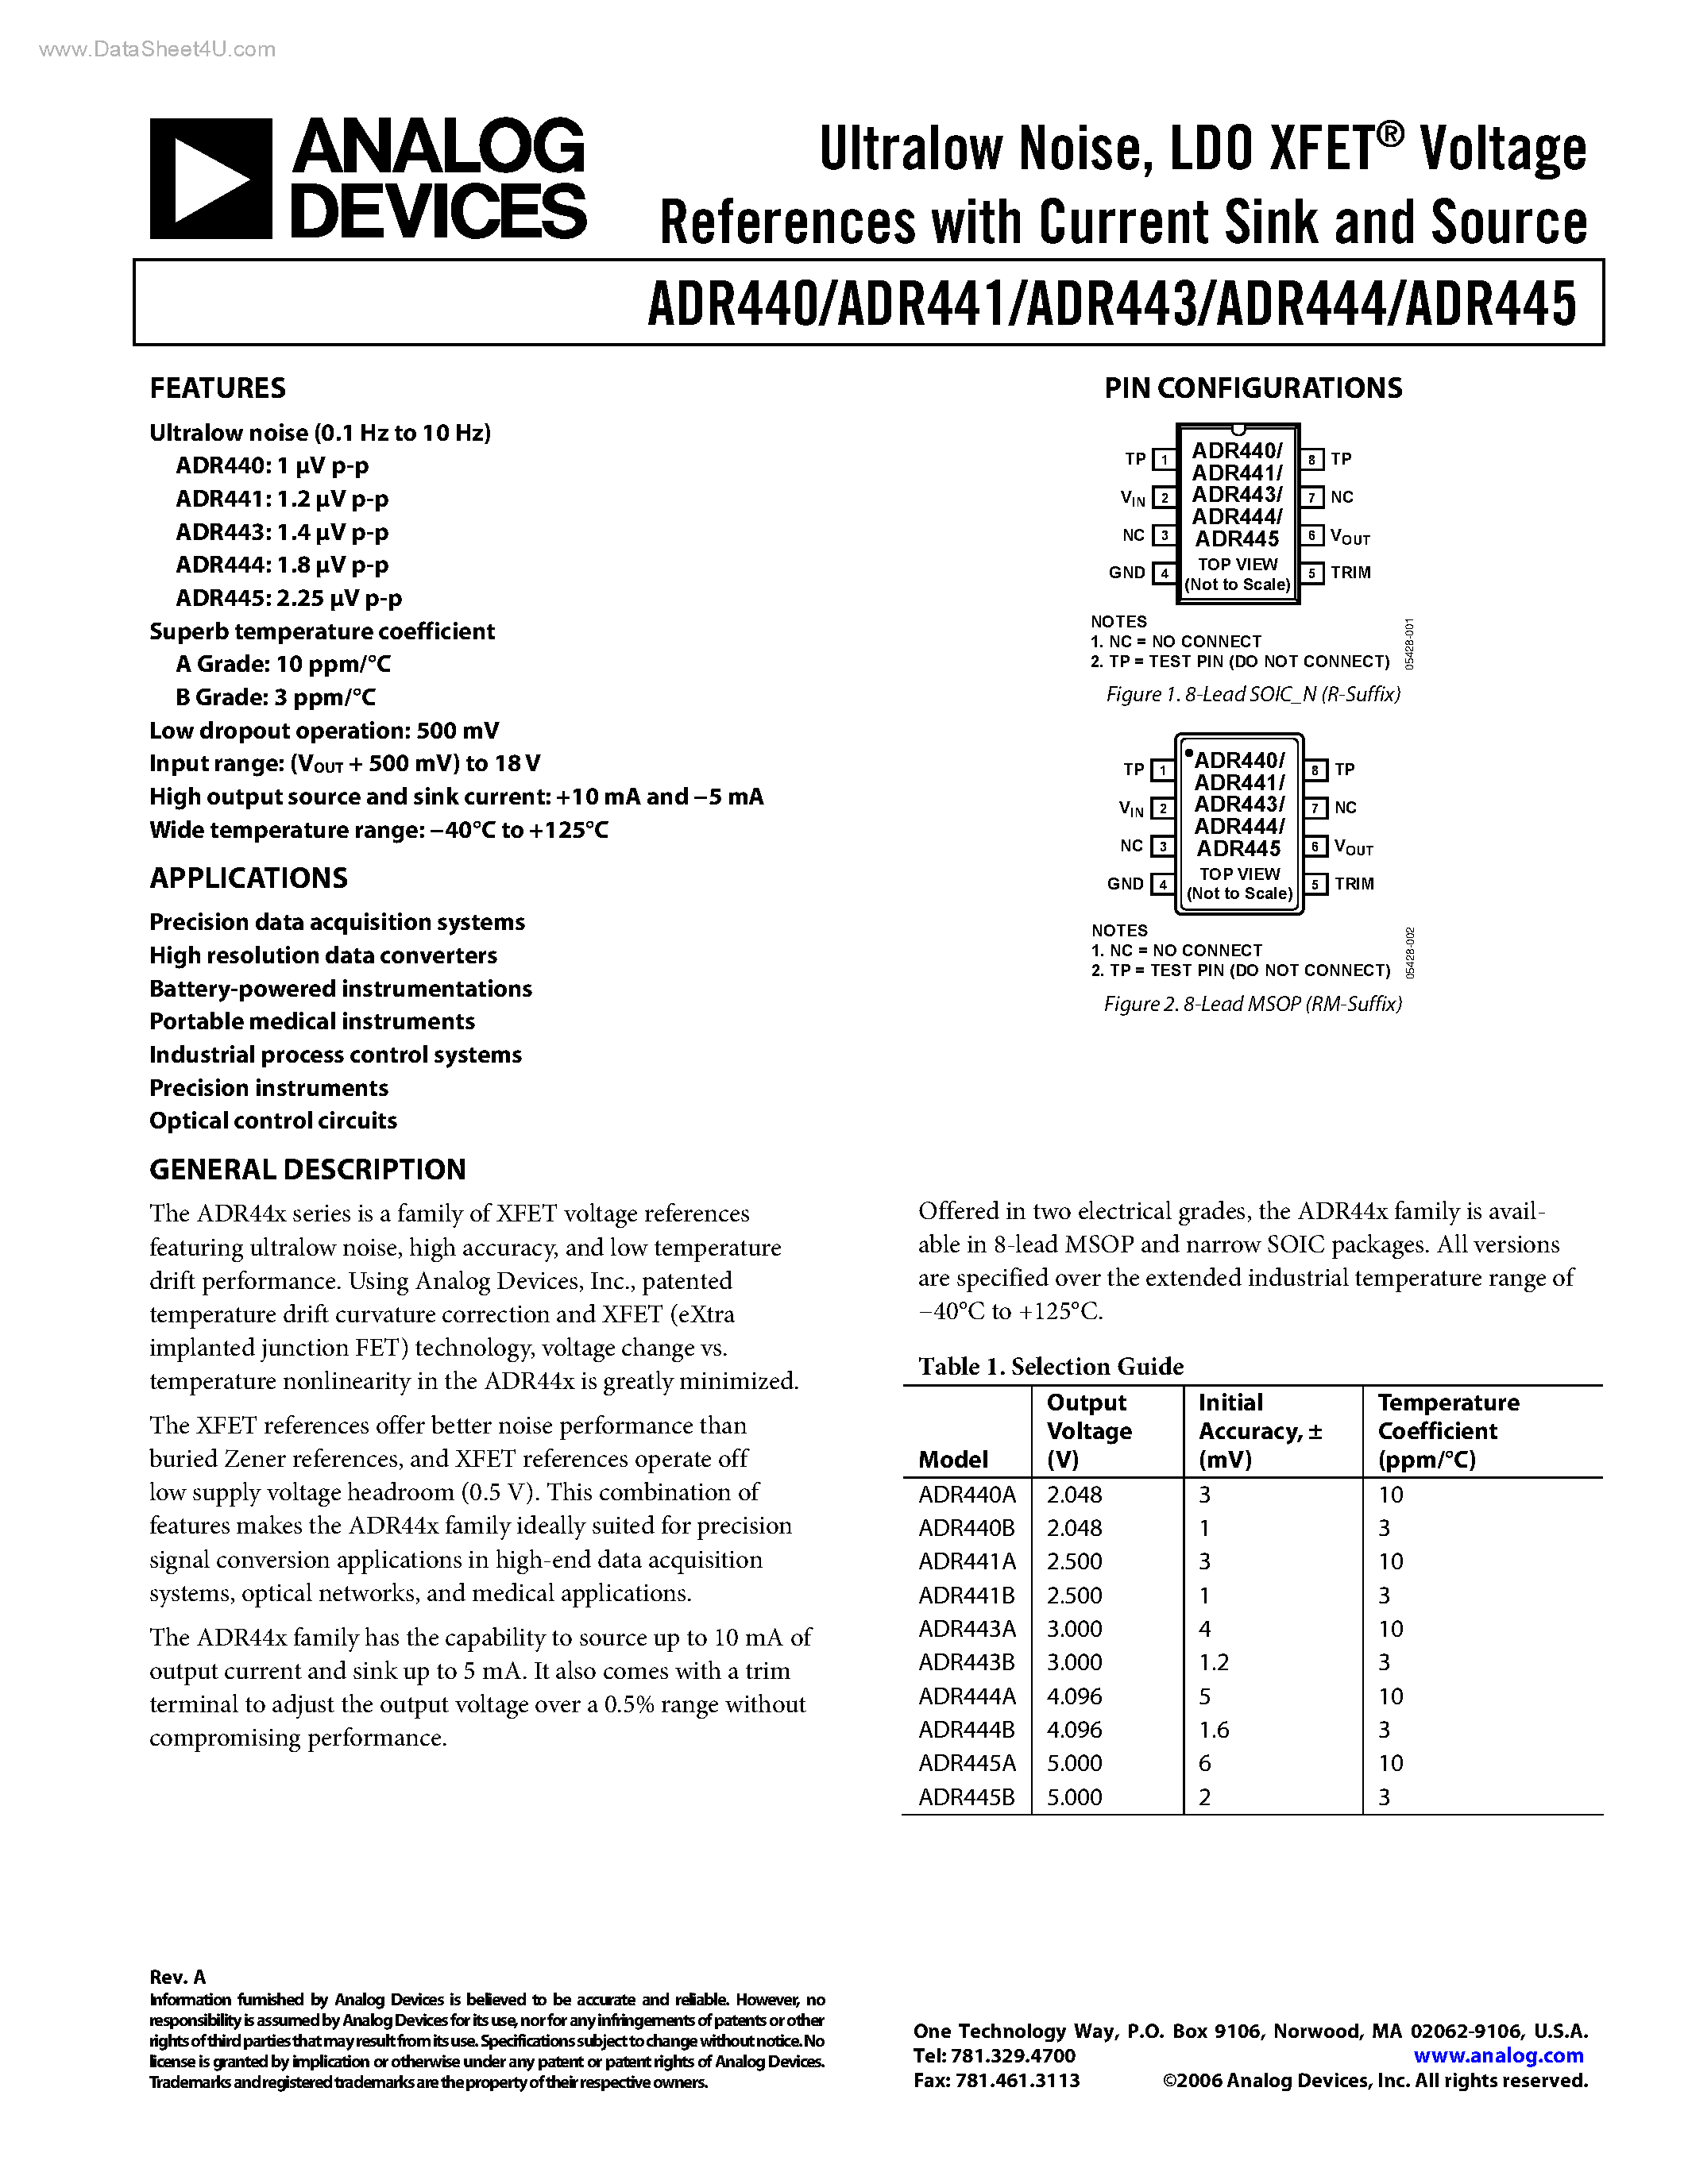 Даташит ADR440 - (ADR440 - ADR445) LDO XFET Voltage References страница 1